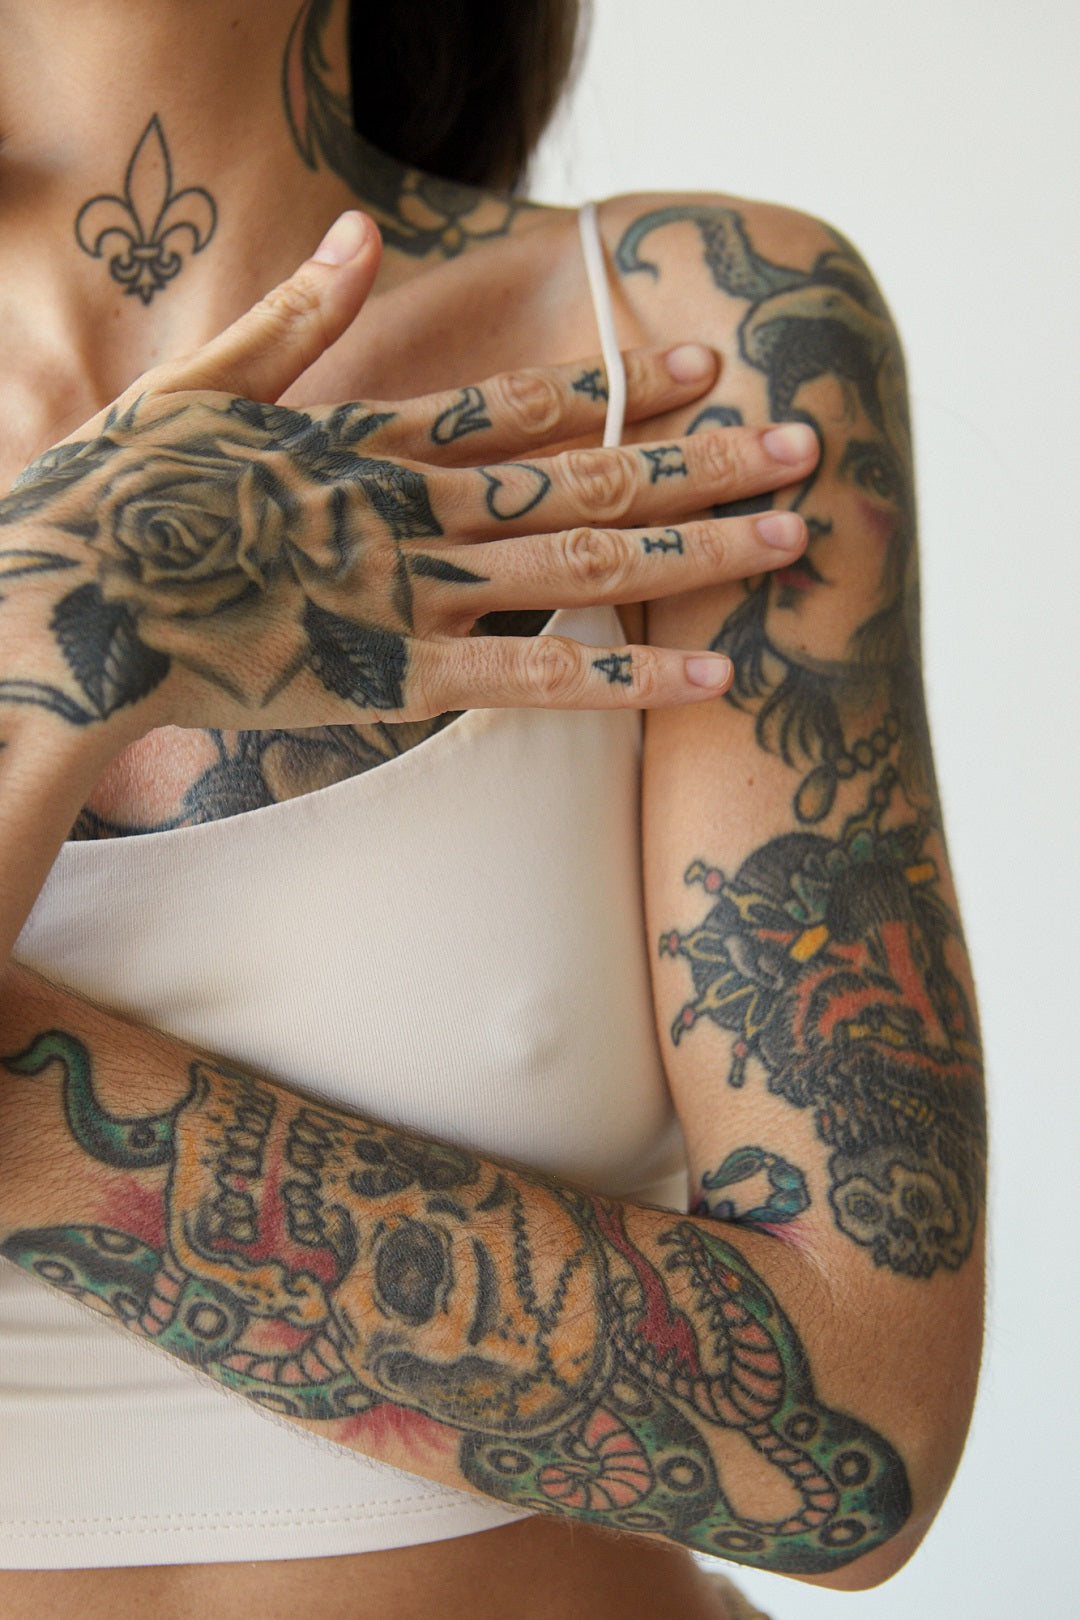 random tattoos turned into a sleeve